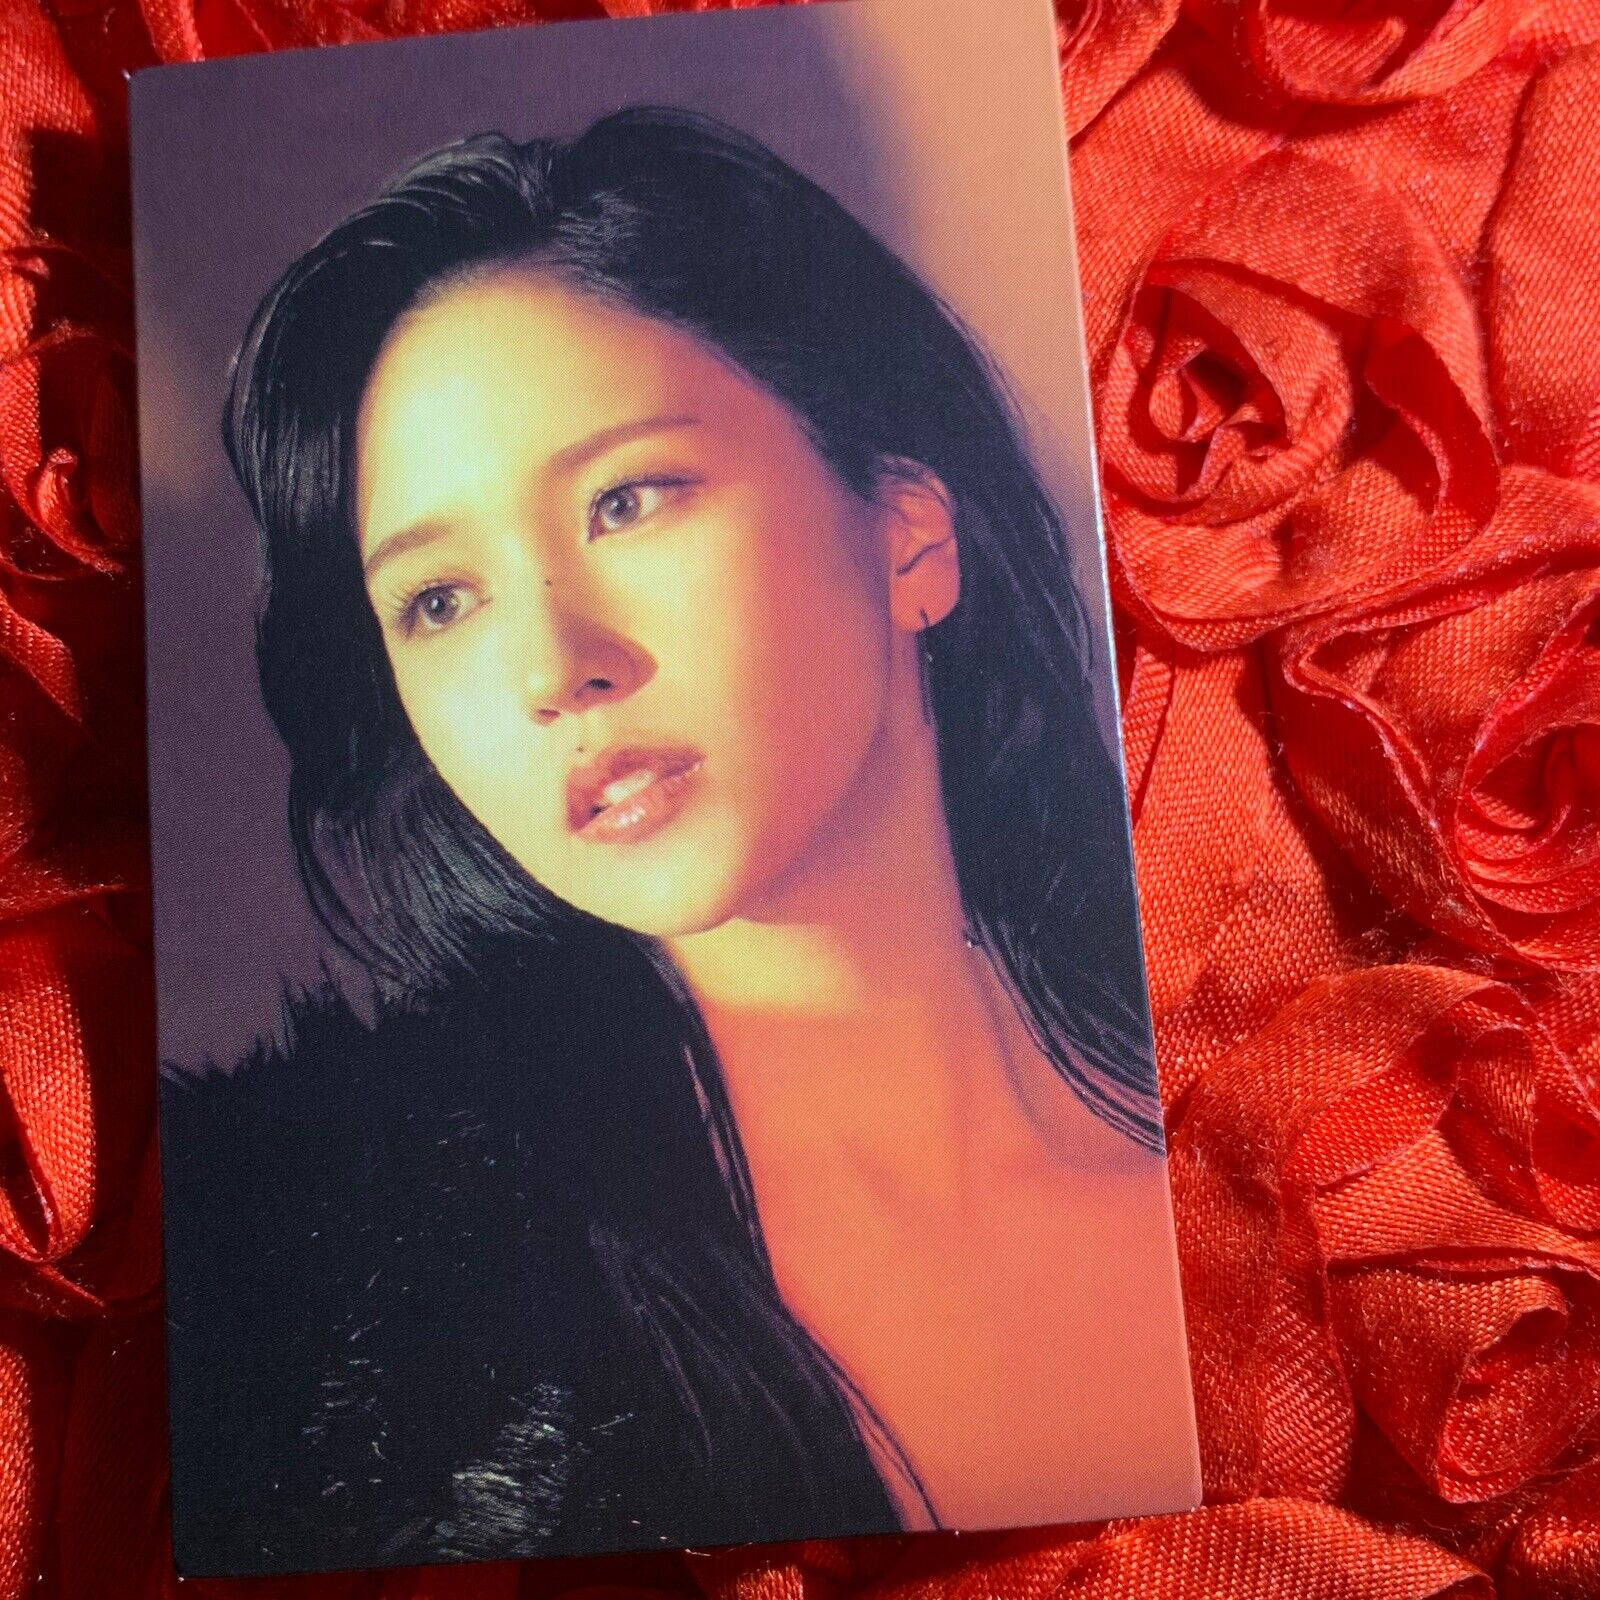 Mina TWICE MOONLIGHT Celeb K-pop Girl Photo Card Sunrise